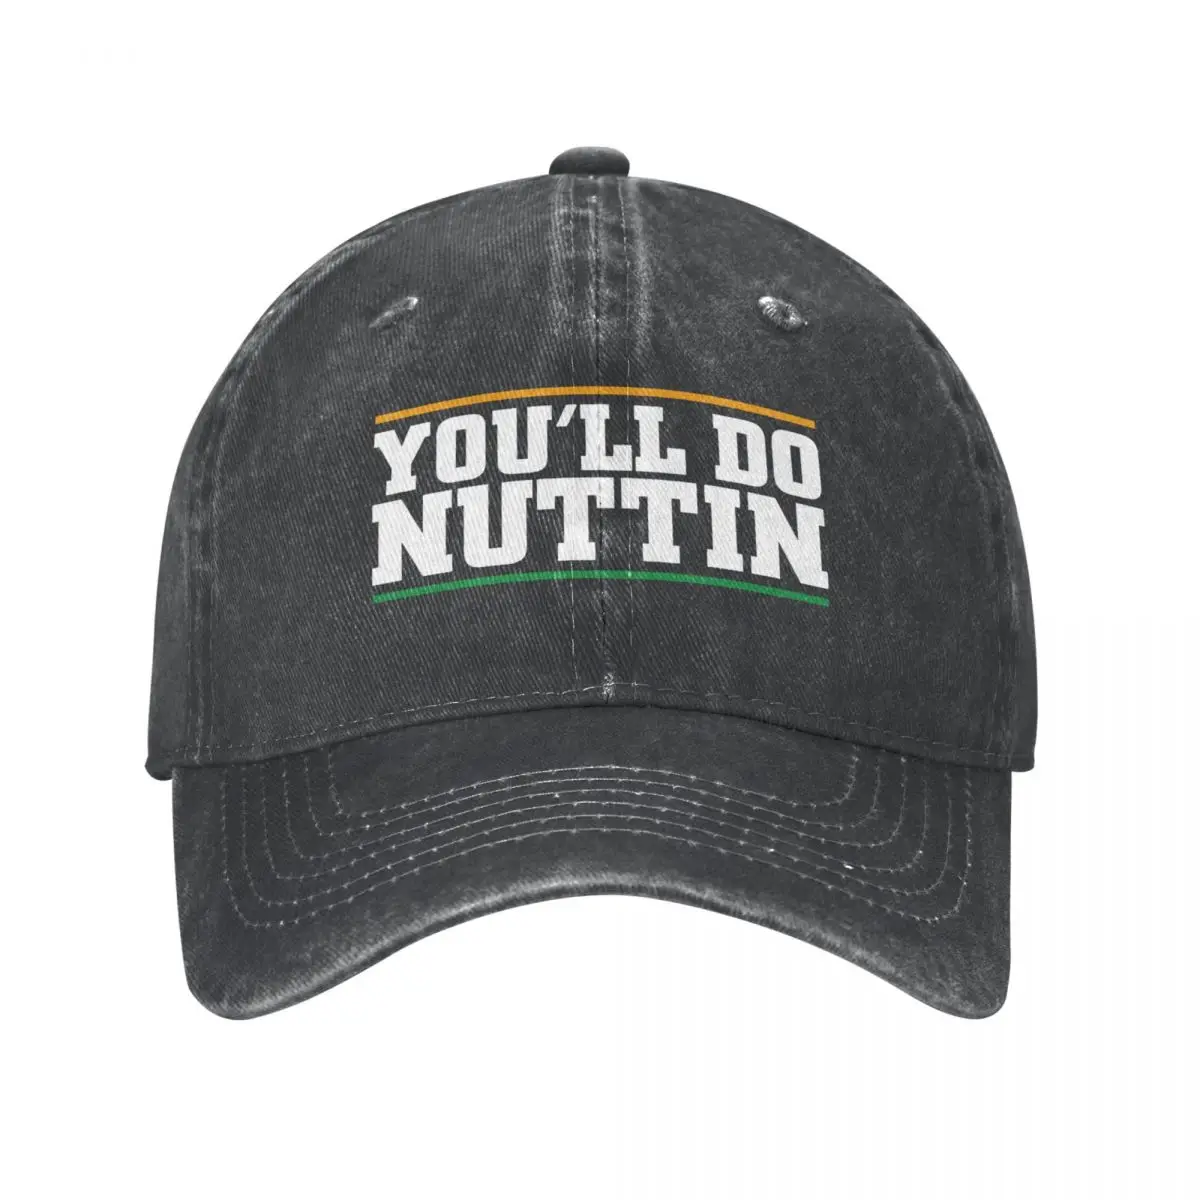 

Conor McGregor You'll Do Nuttin Denim Baseball Caps Hats High Quality Casquette Peaked Unisex Headwear